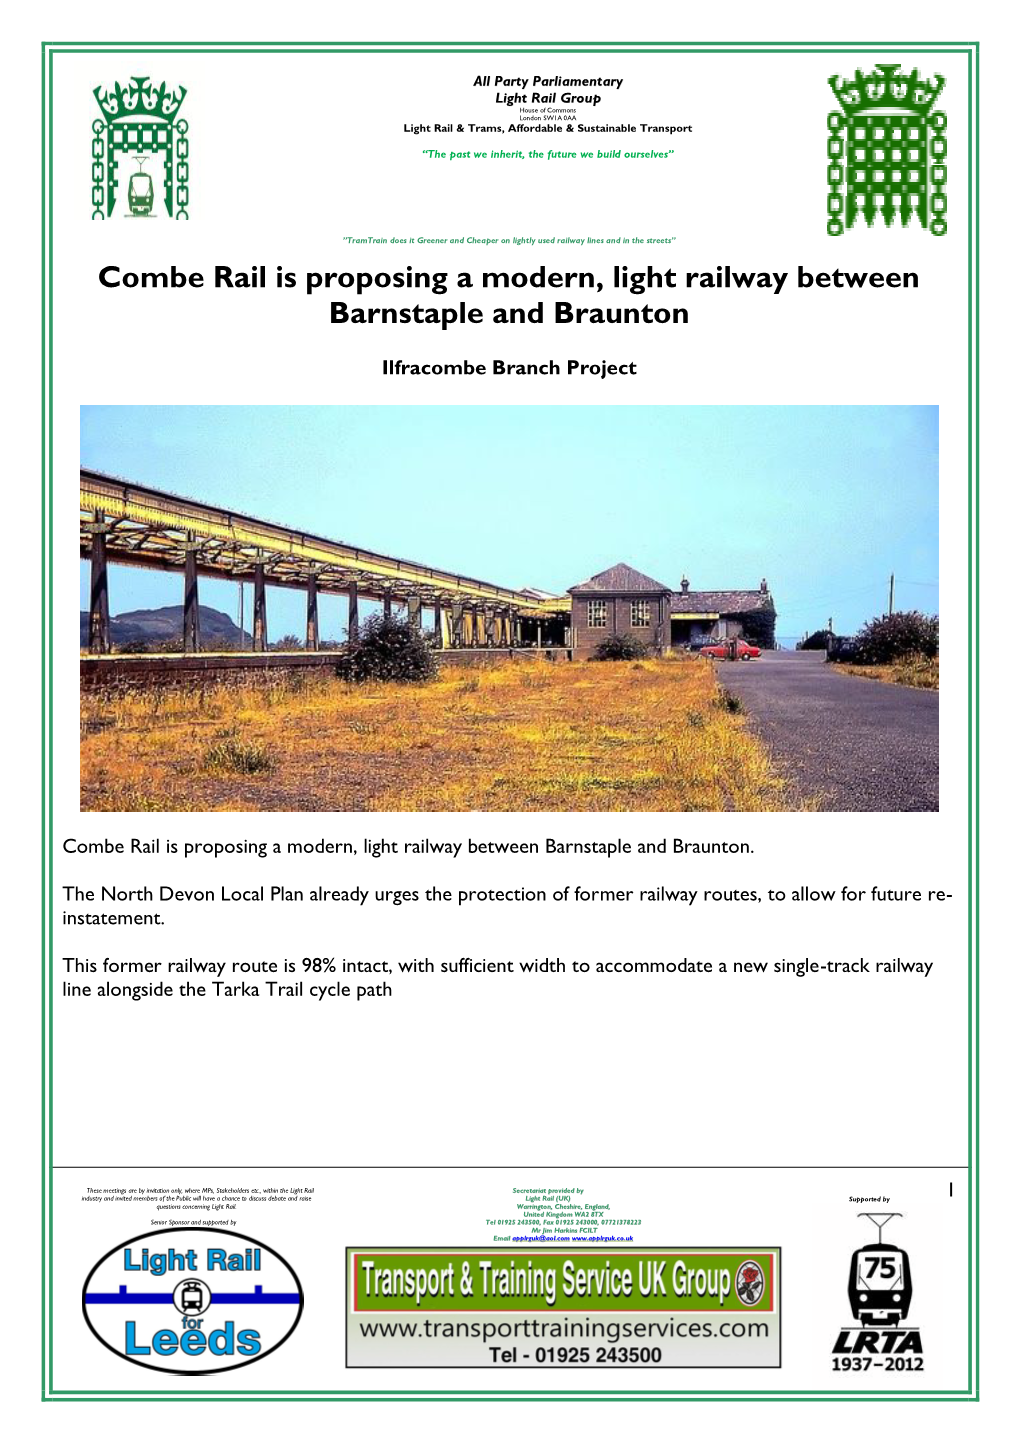 Combe Rail Is Proposing a Modern, Light Railway Between Barnstaple and Braunton